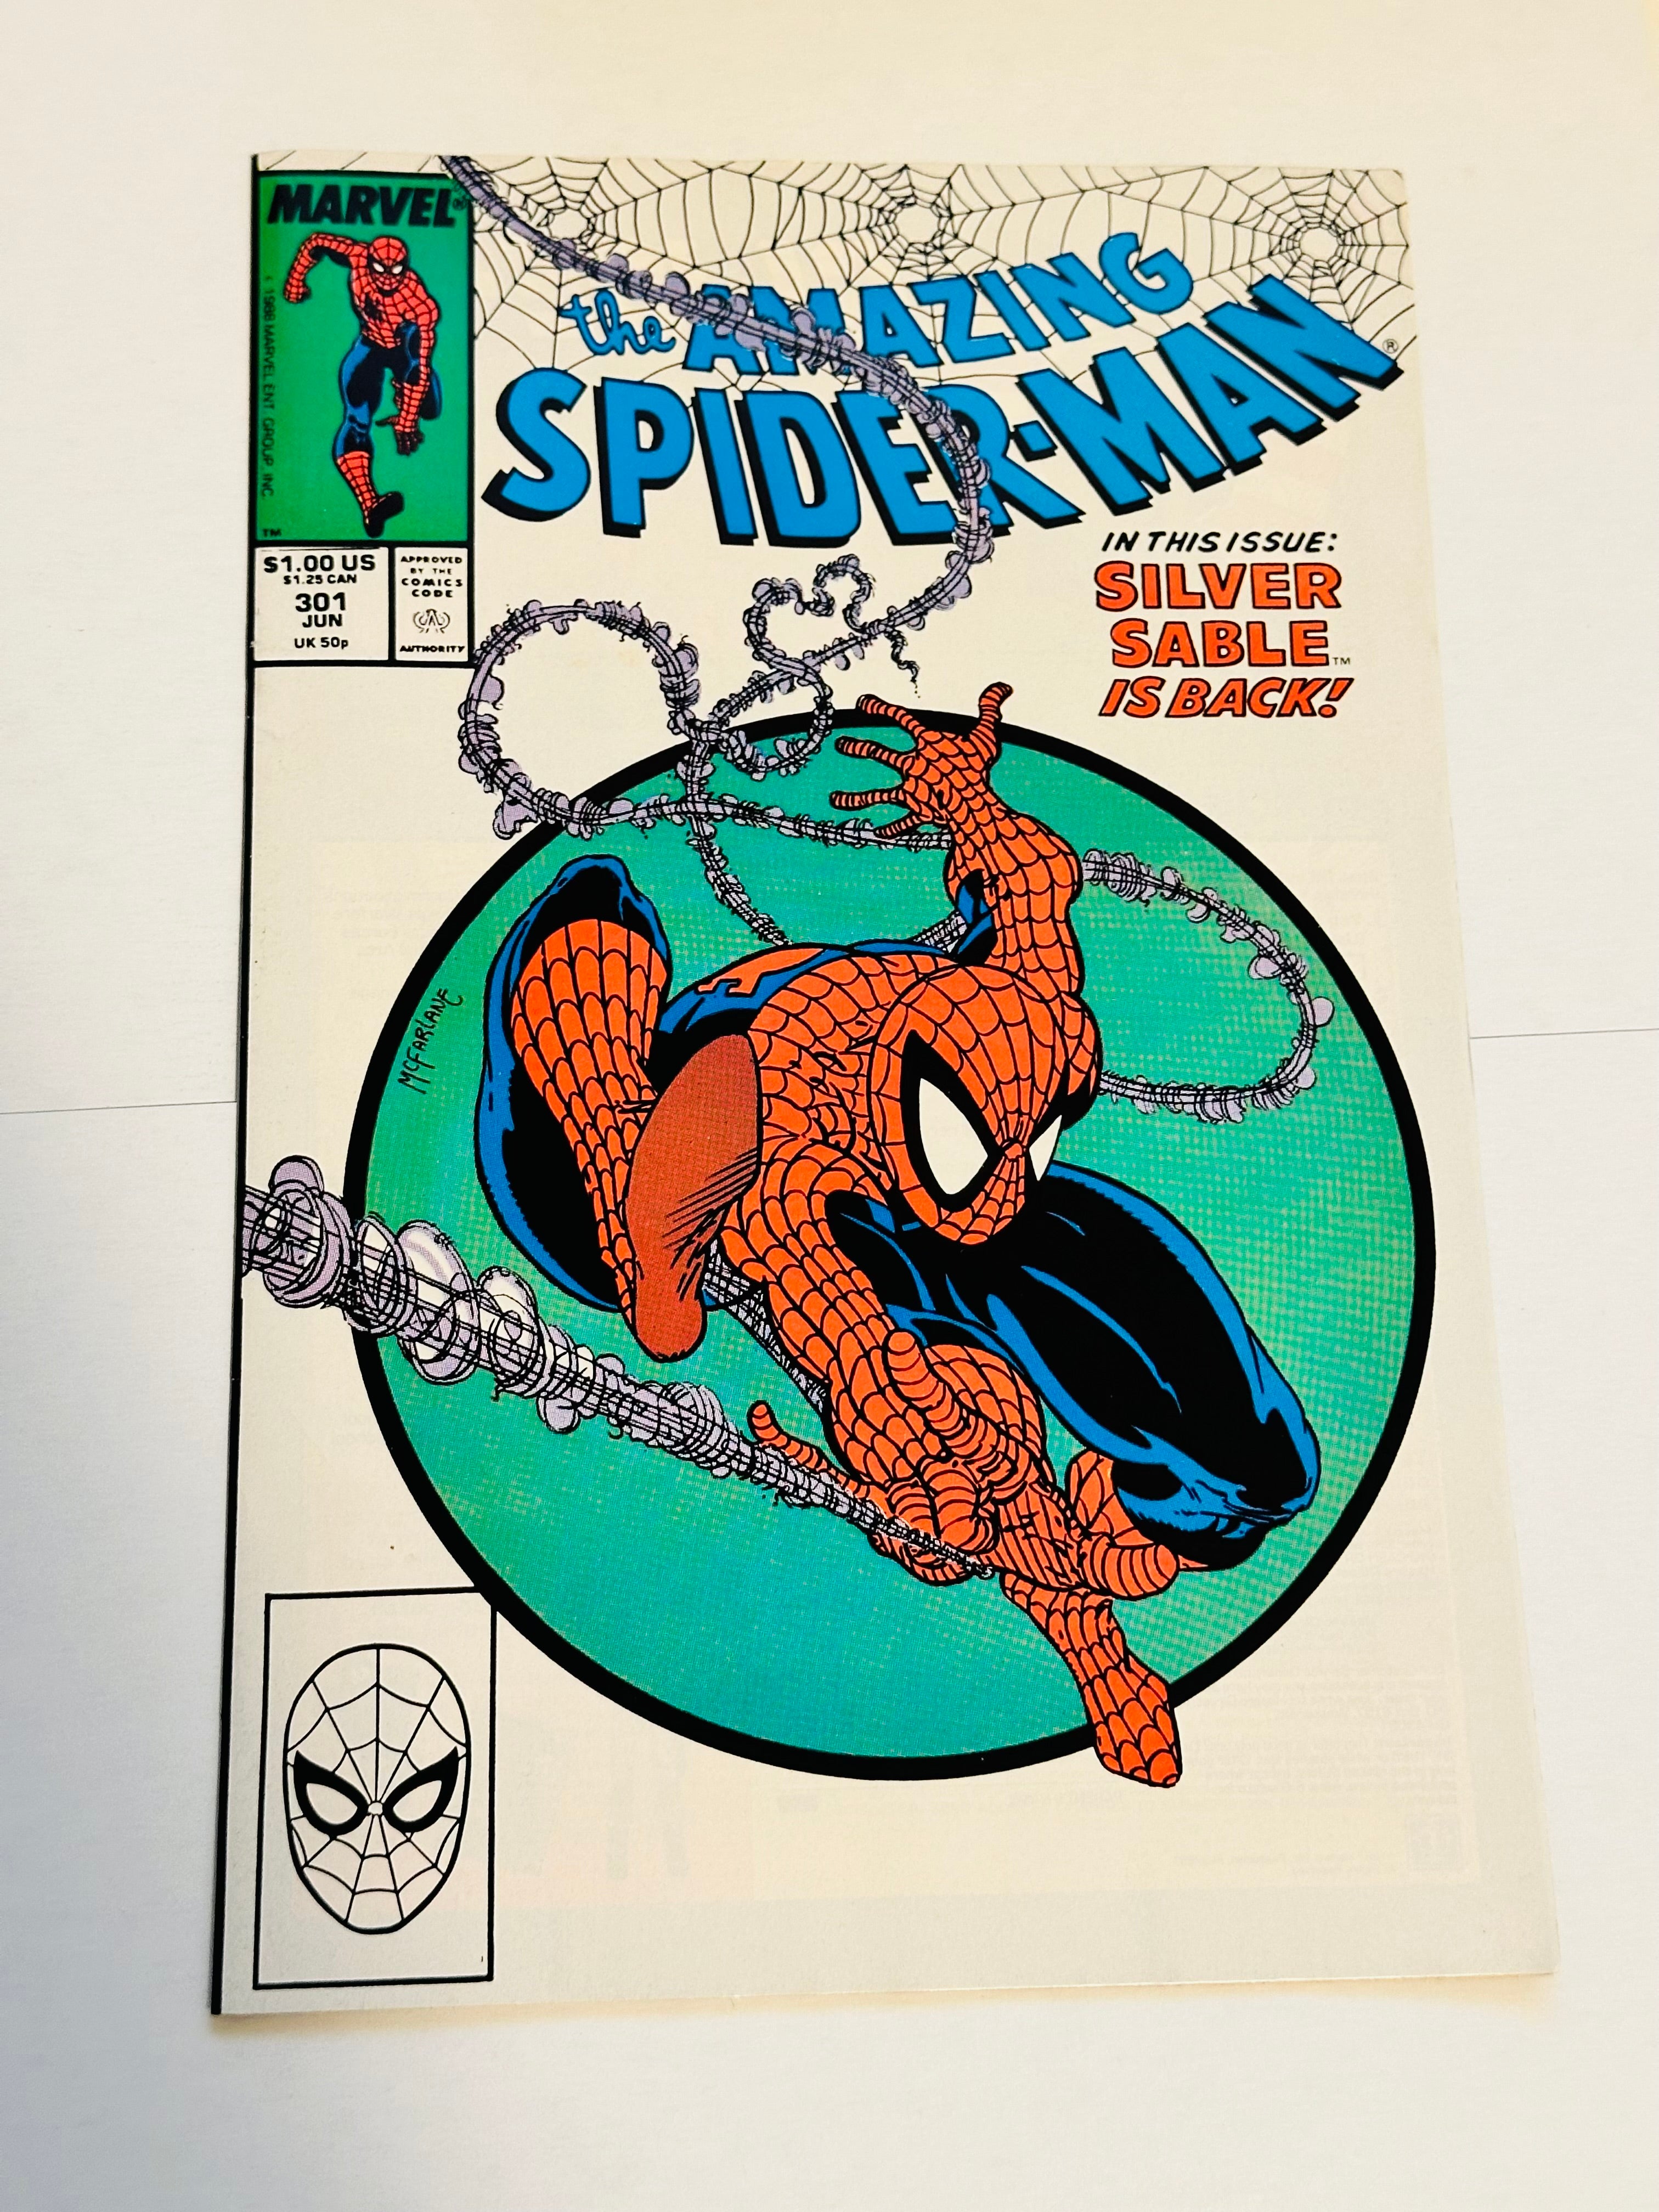 Amazing Spider-man #301 Vf/Nm high grade condition comic book 1988